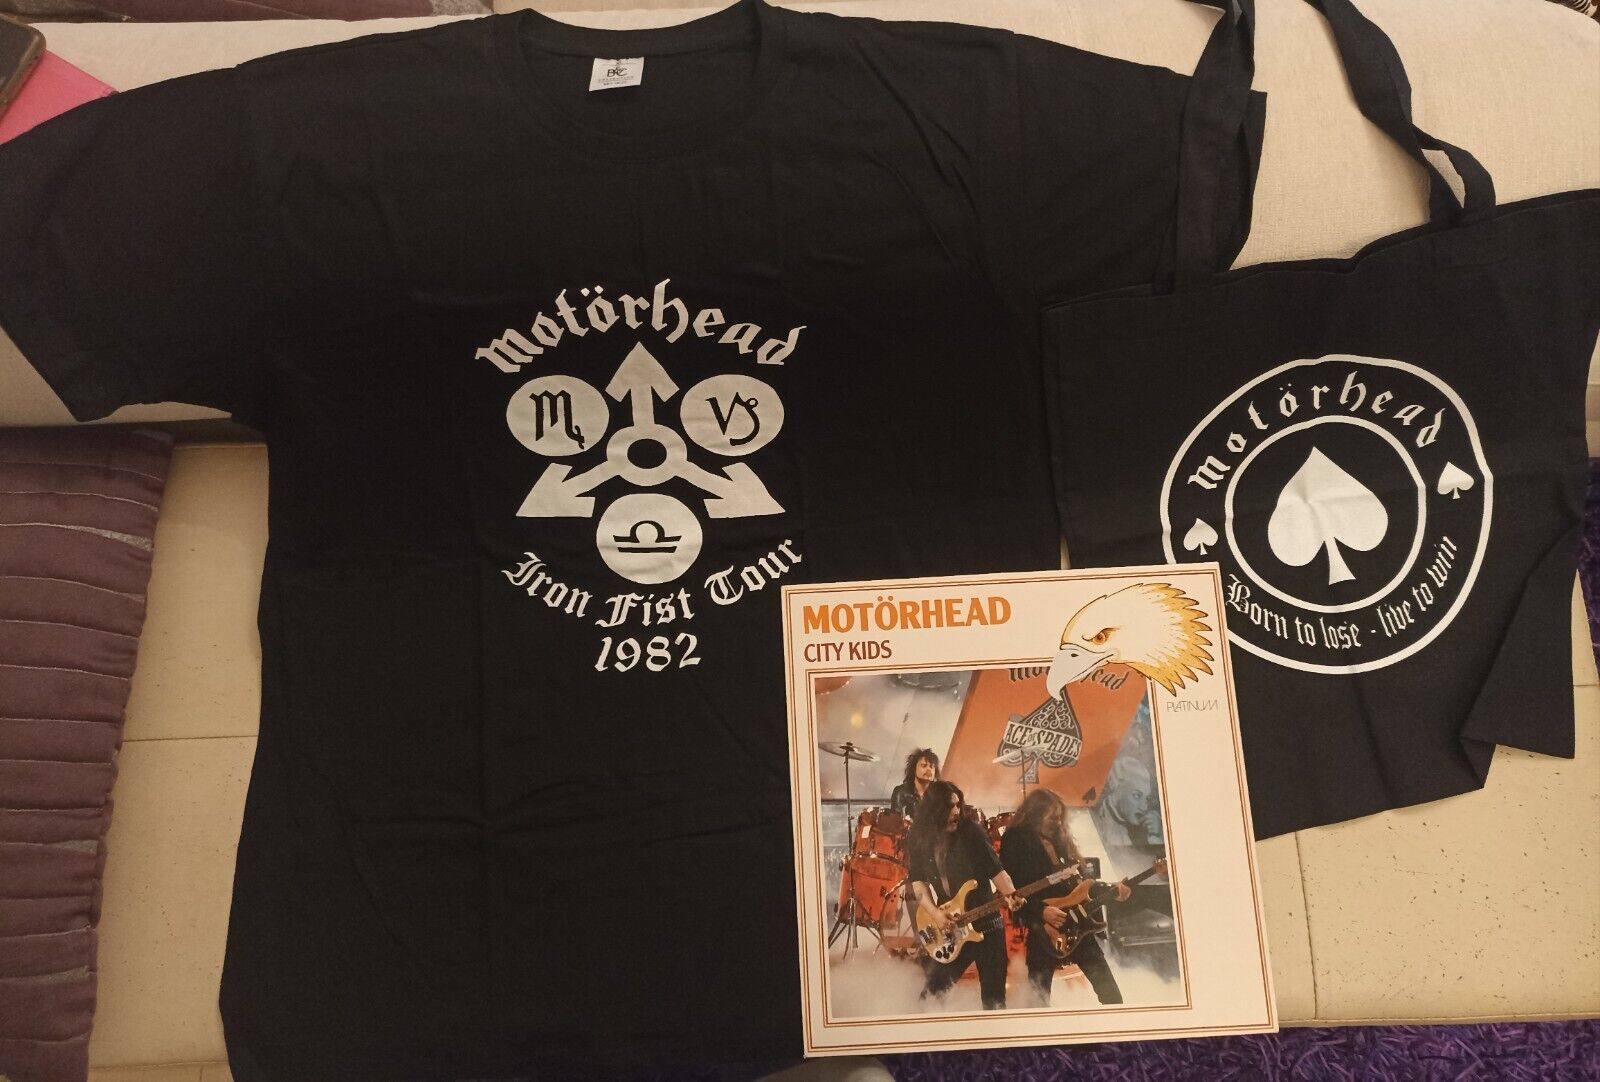 MOTORHEAD - City Kids (1985) LP & T Shirt / Bag HEAVY METAL Lemmy